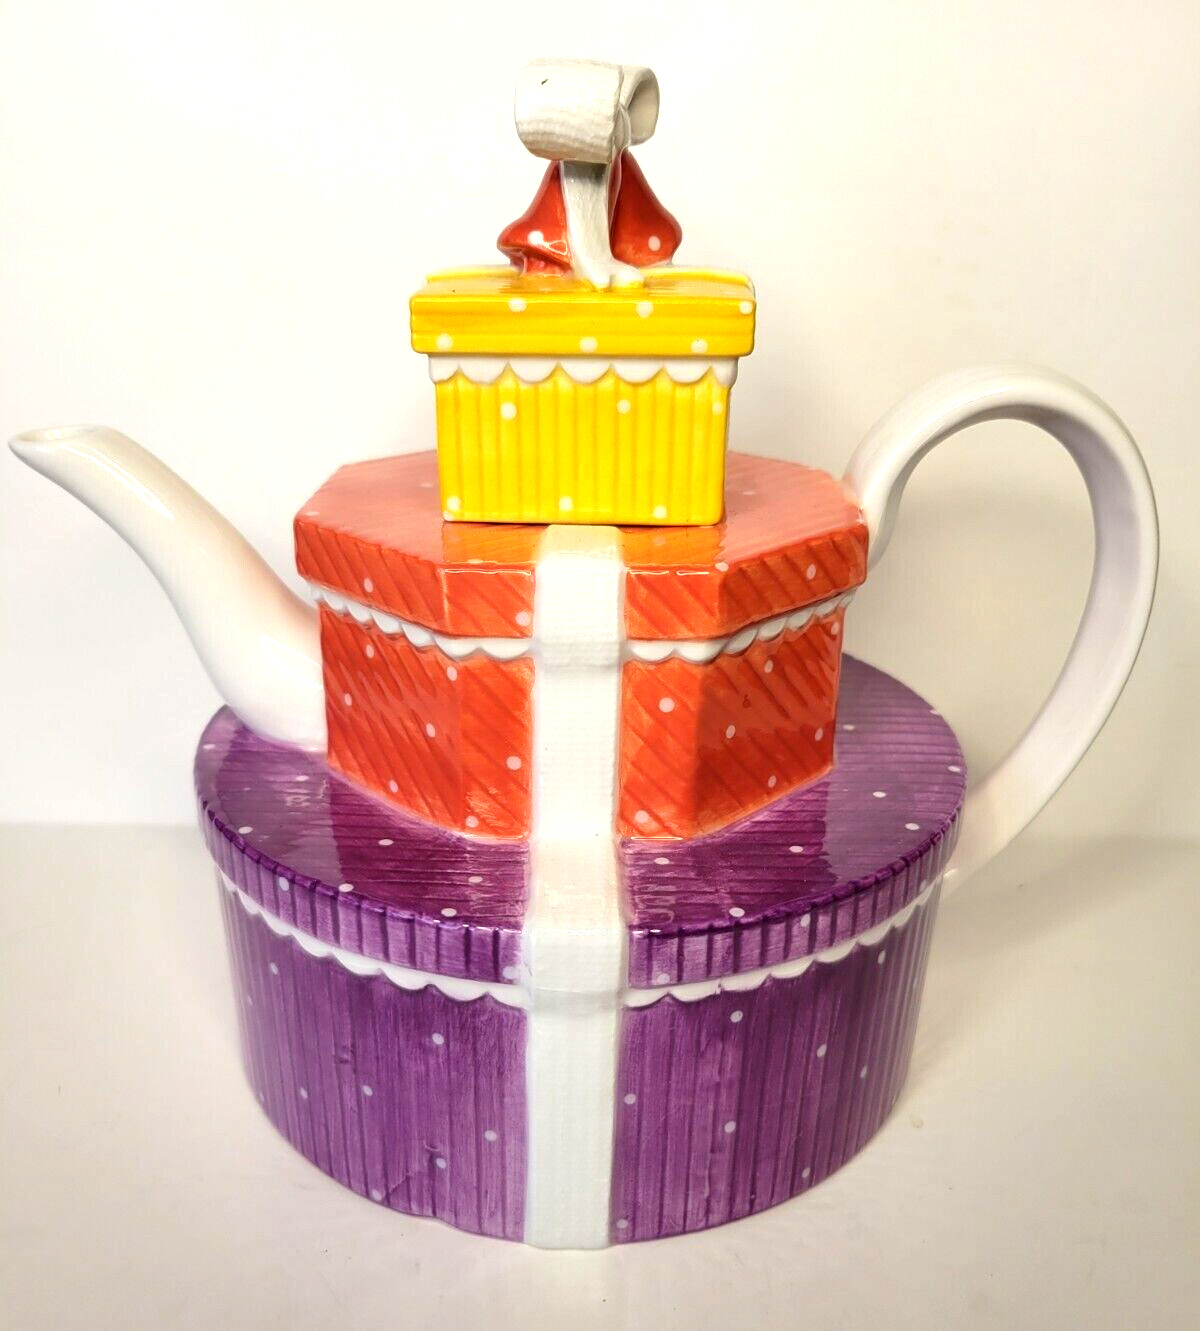 Dept 56 Teapot Sunday Brunch Birthday Gifts Purple Orange Yellow Presents